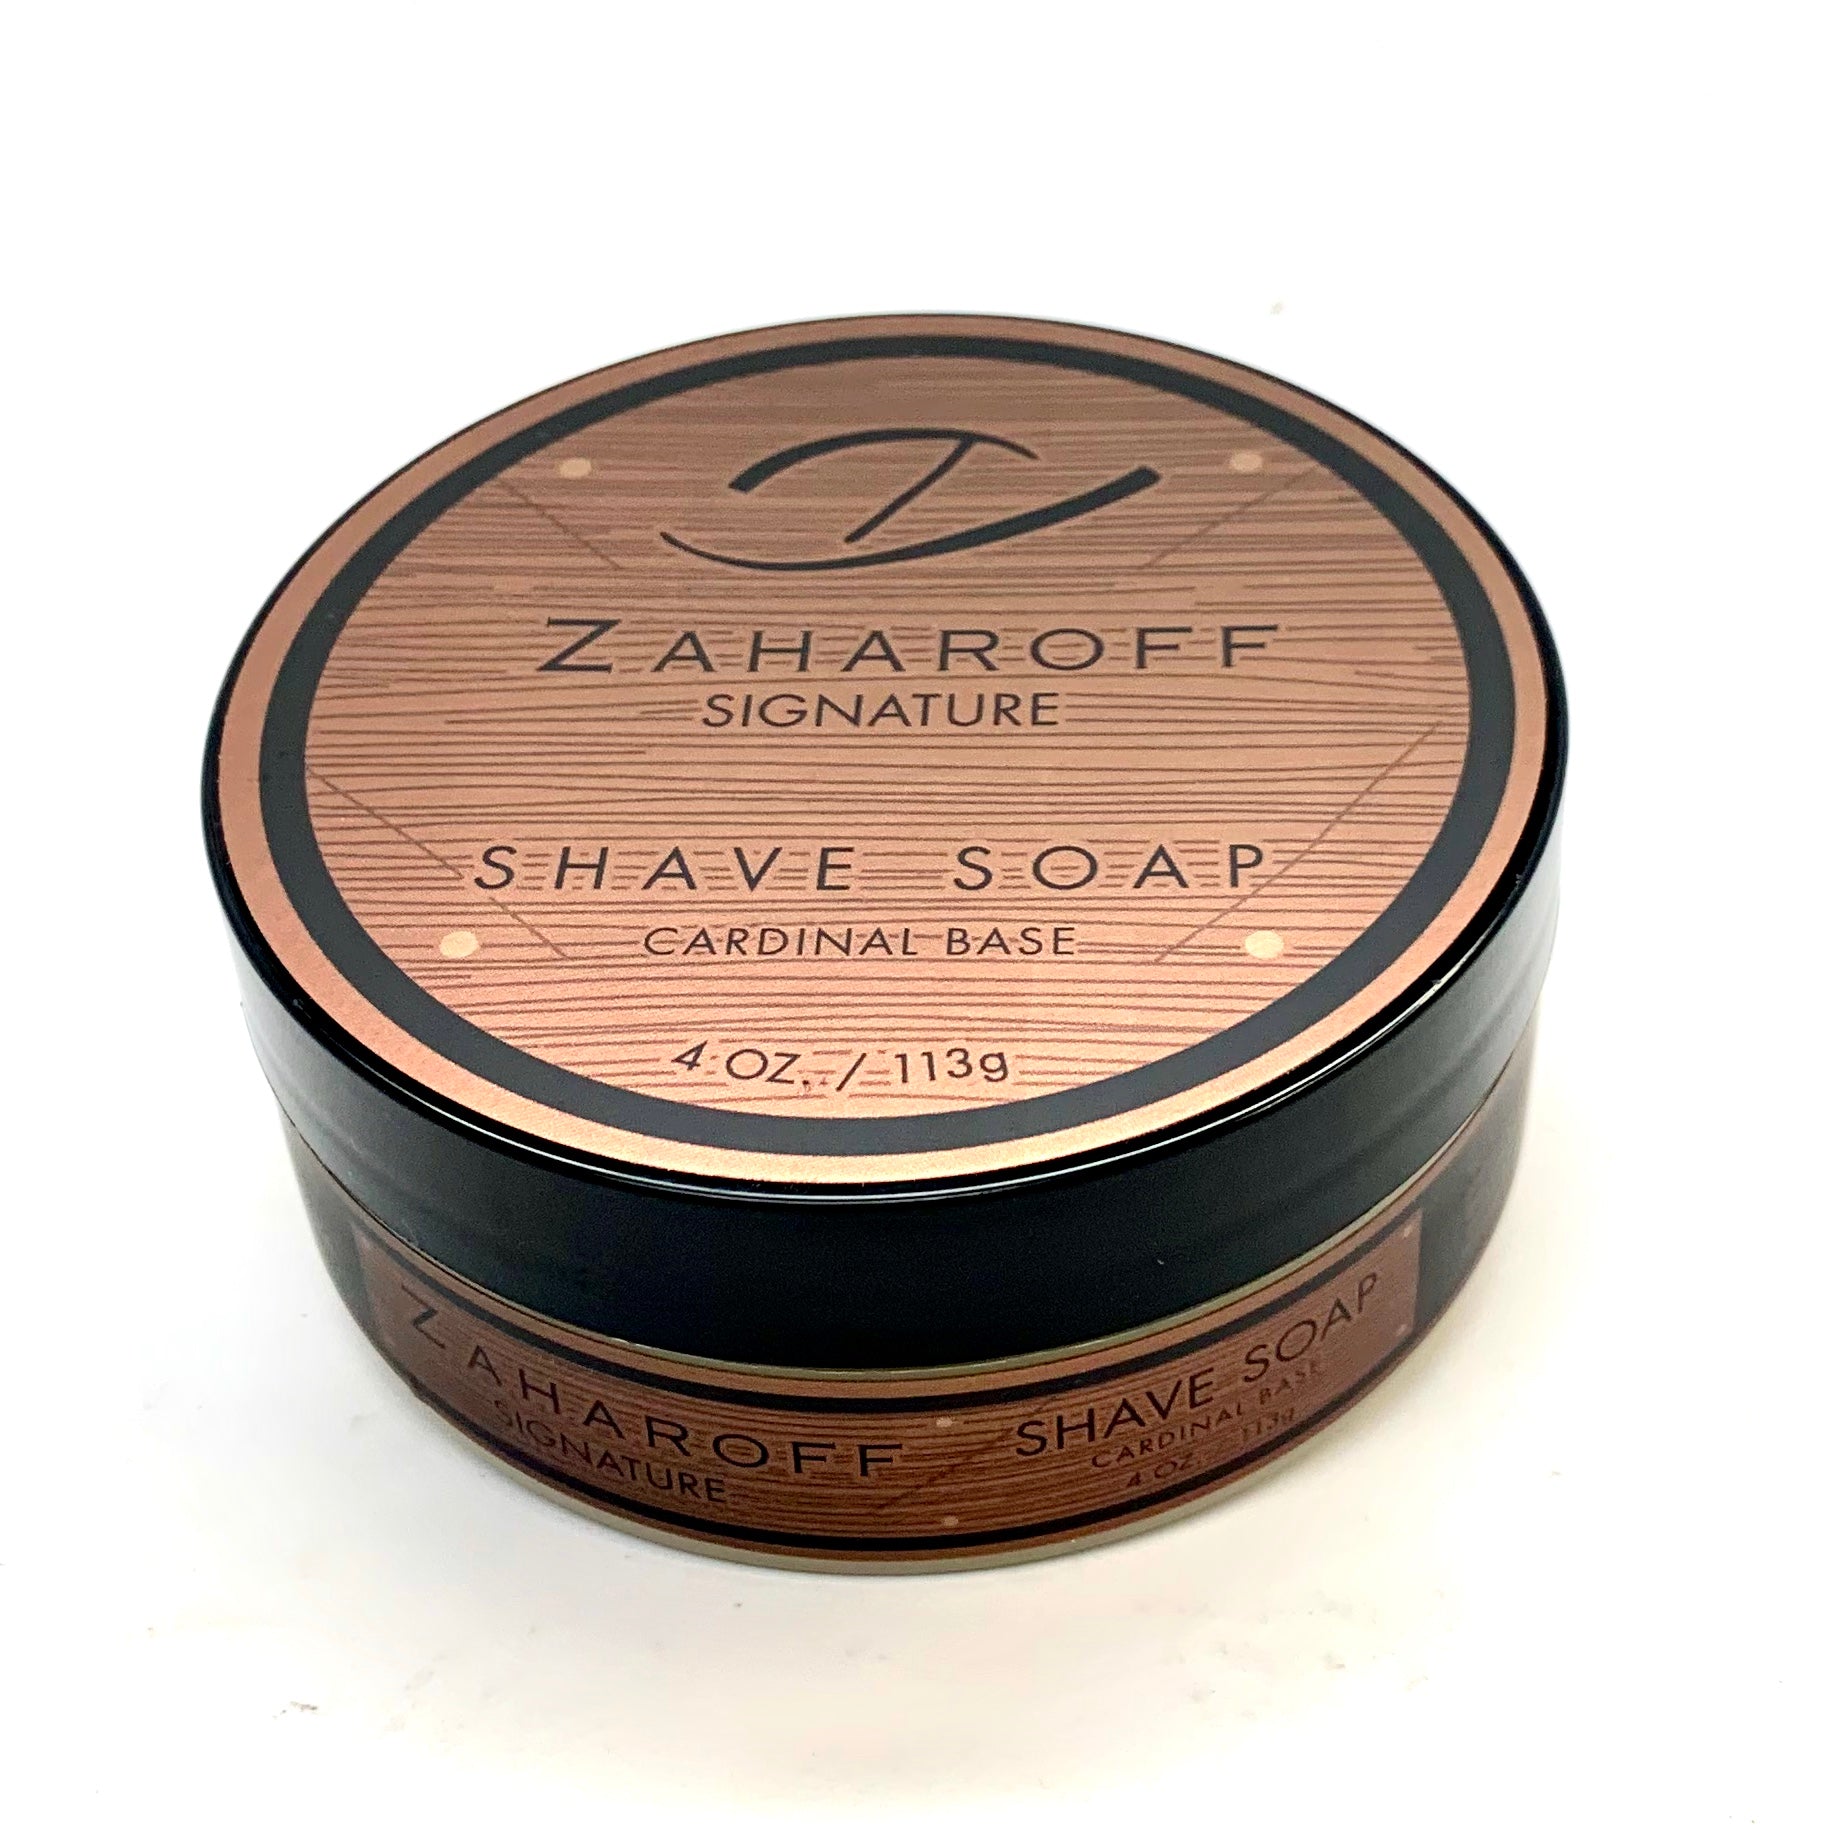 Zaharoff Signature Shave Soap